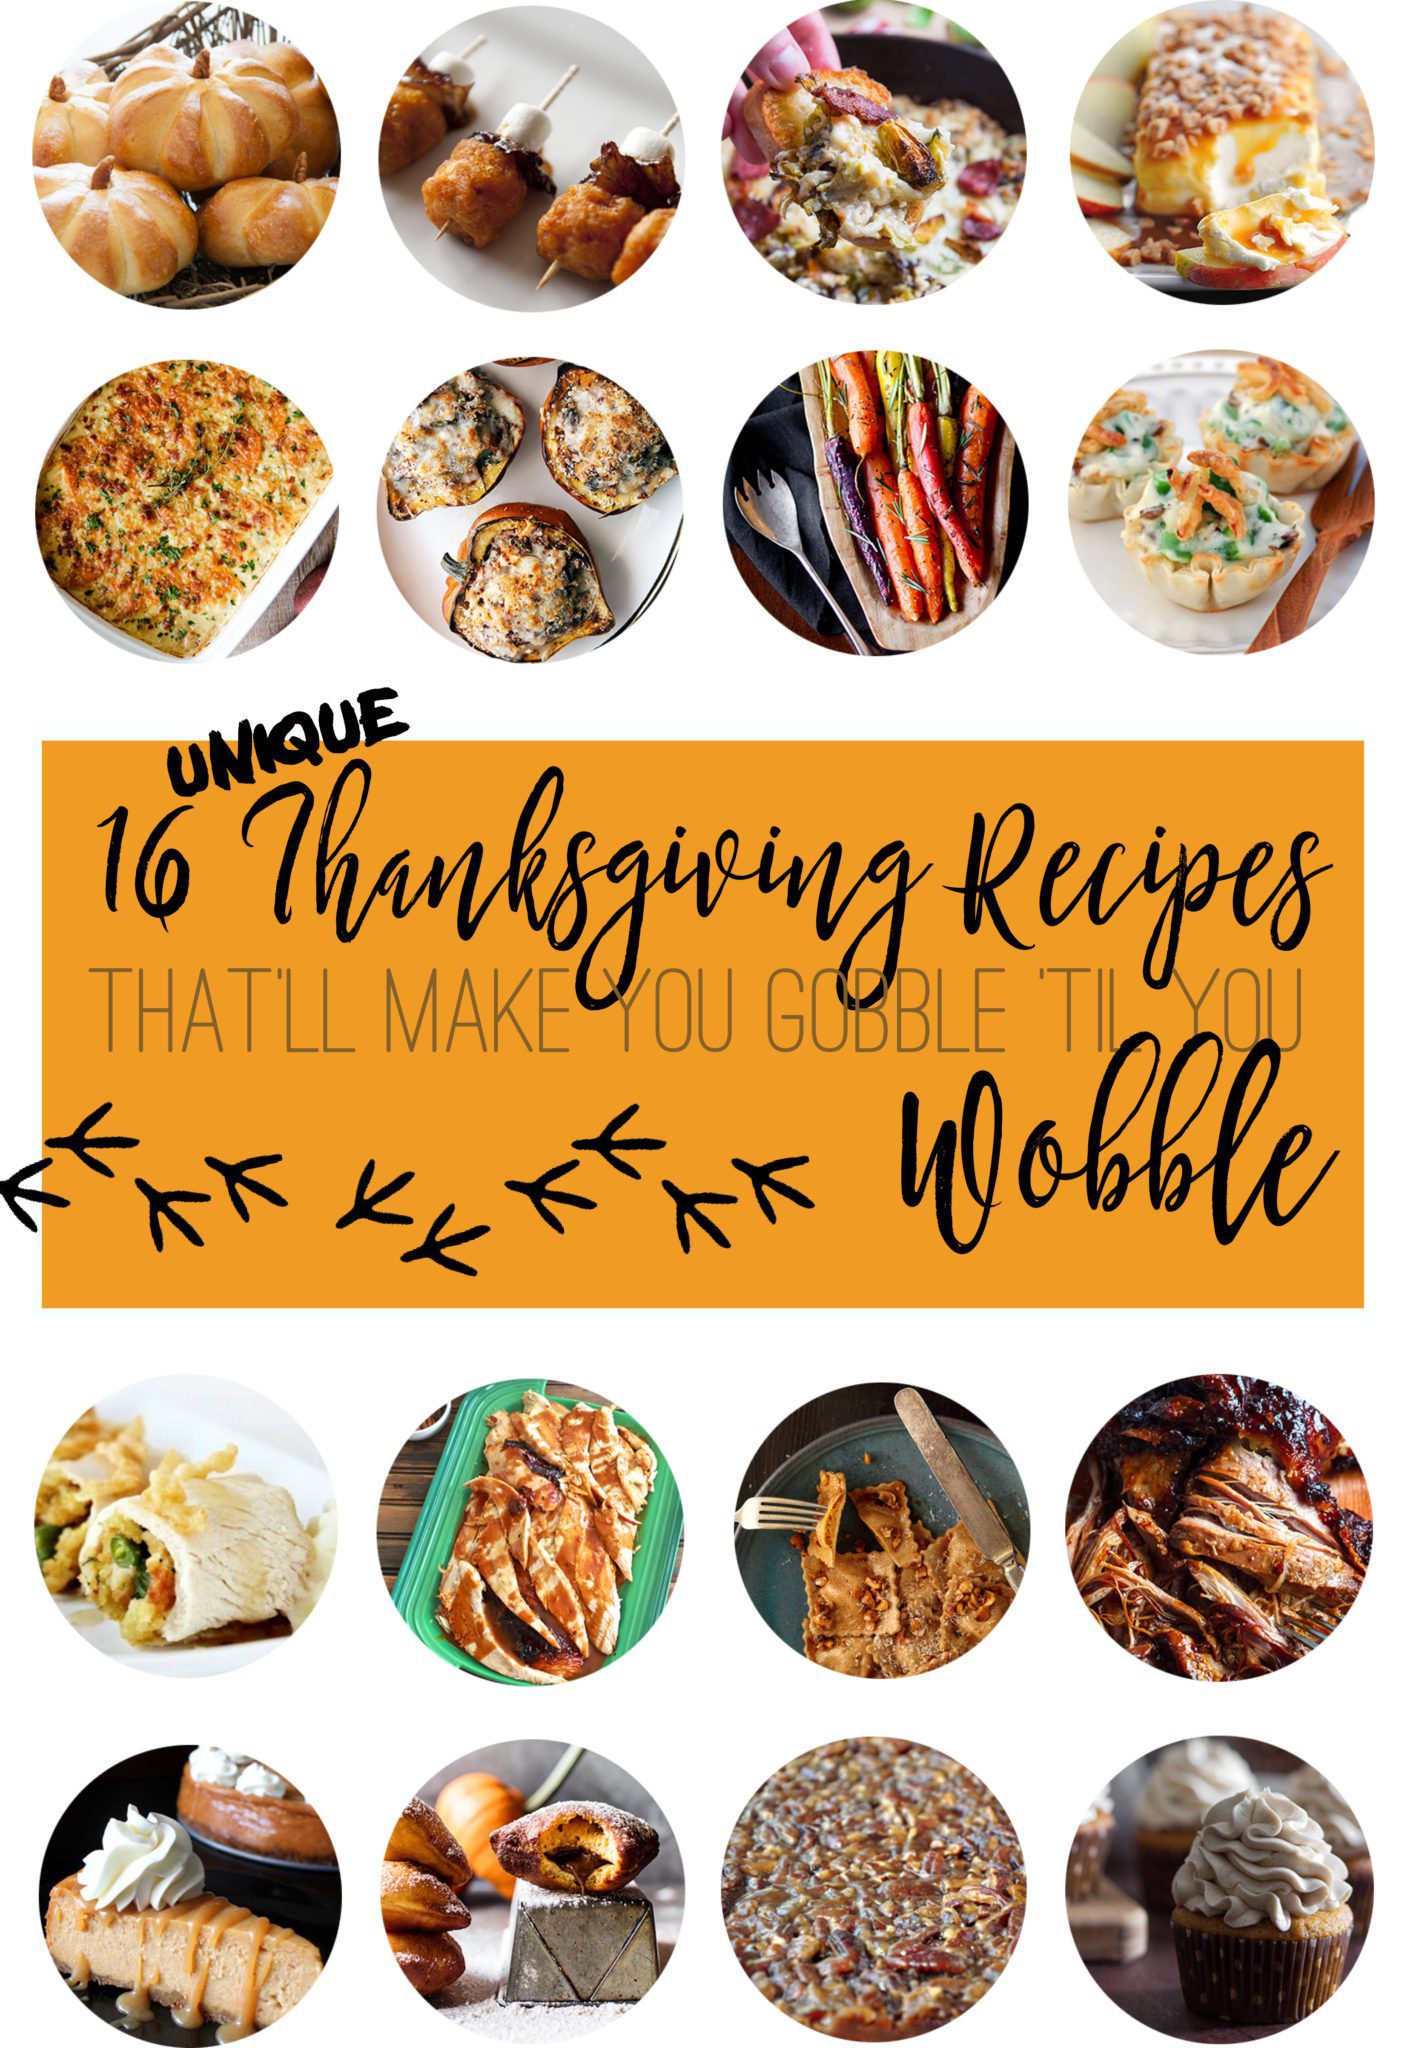 16 Unique Thanksgiving Recipes That’ll Make You Gobble ‘Til You Wobble